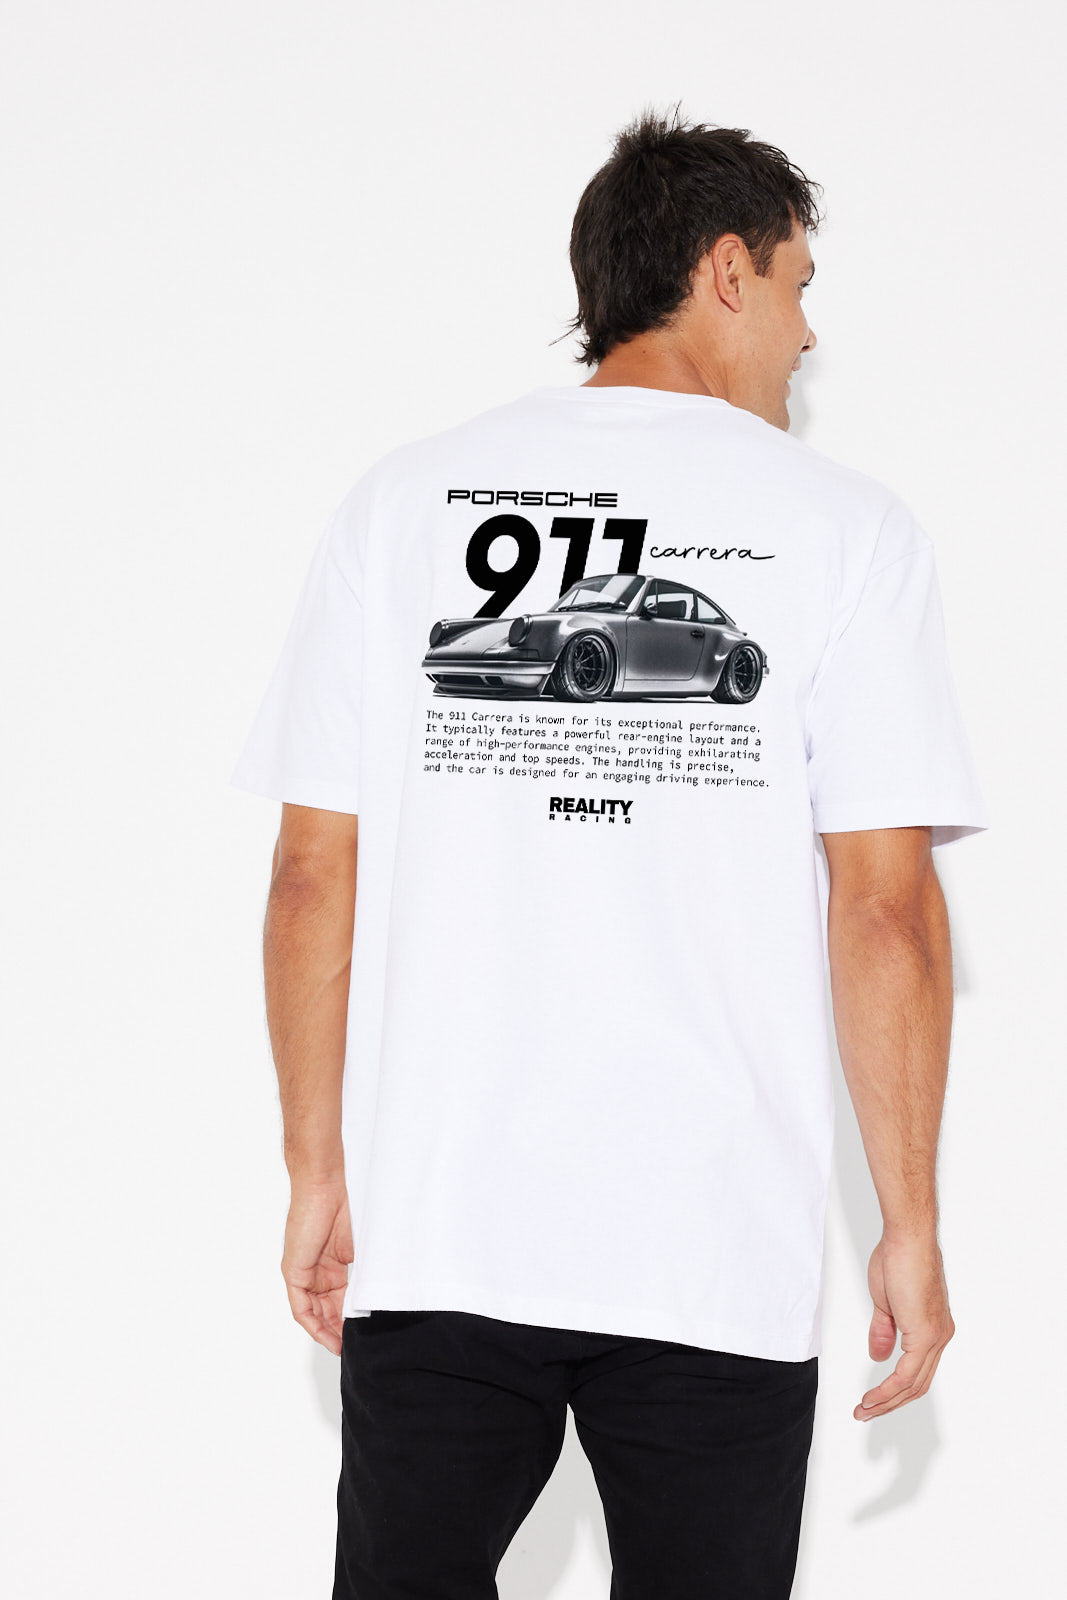 911 WB Carrera Tee